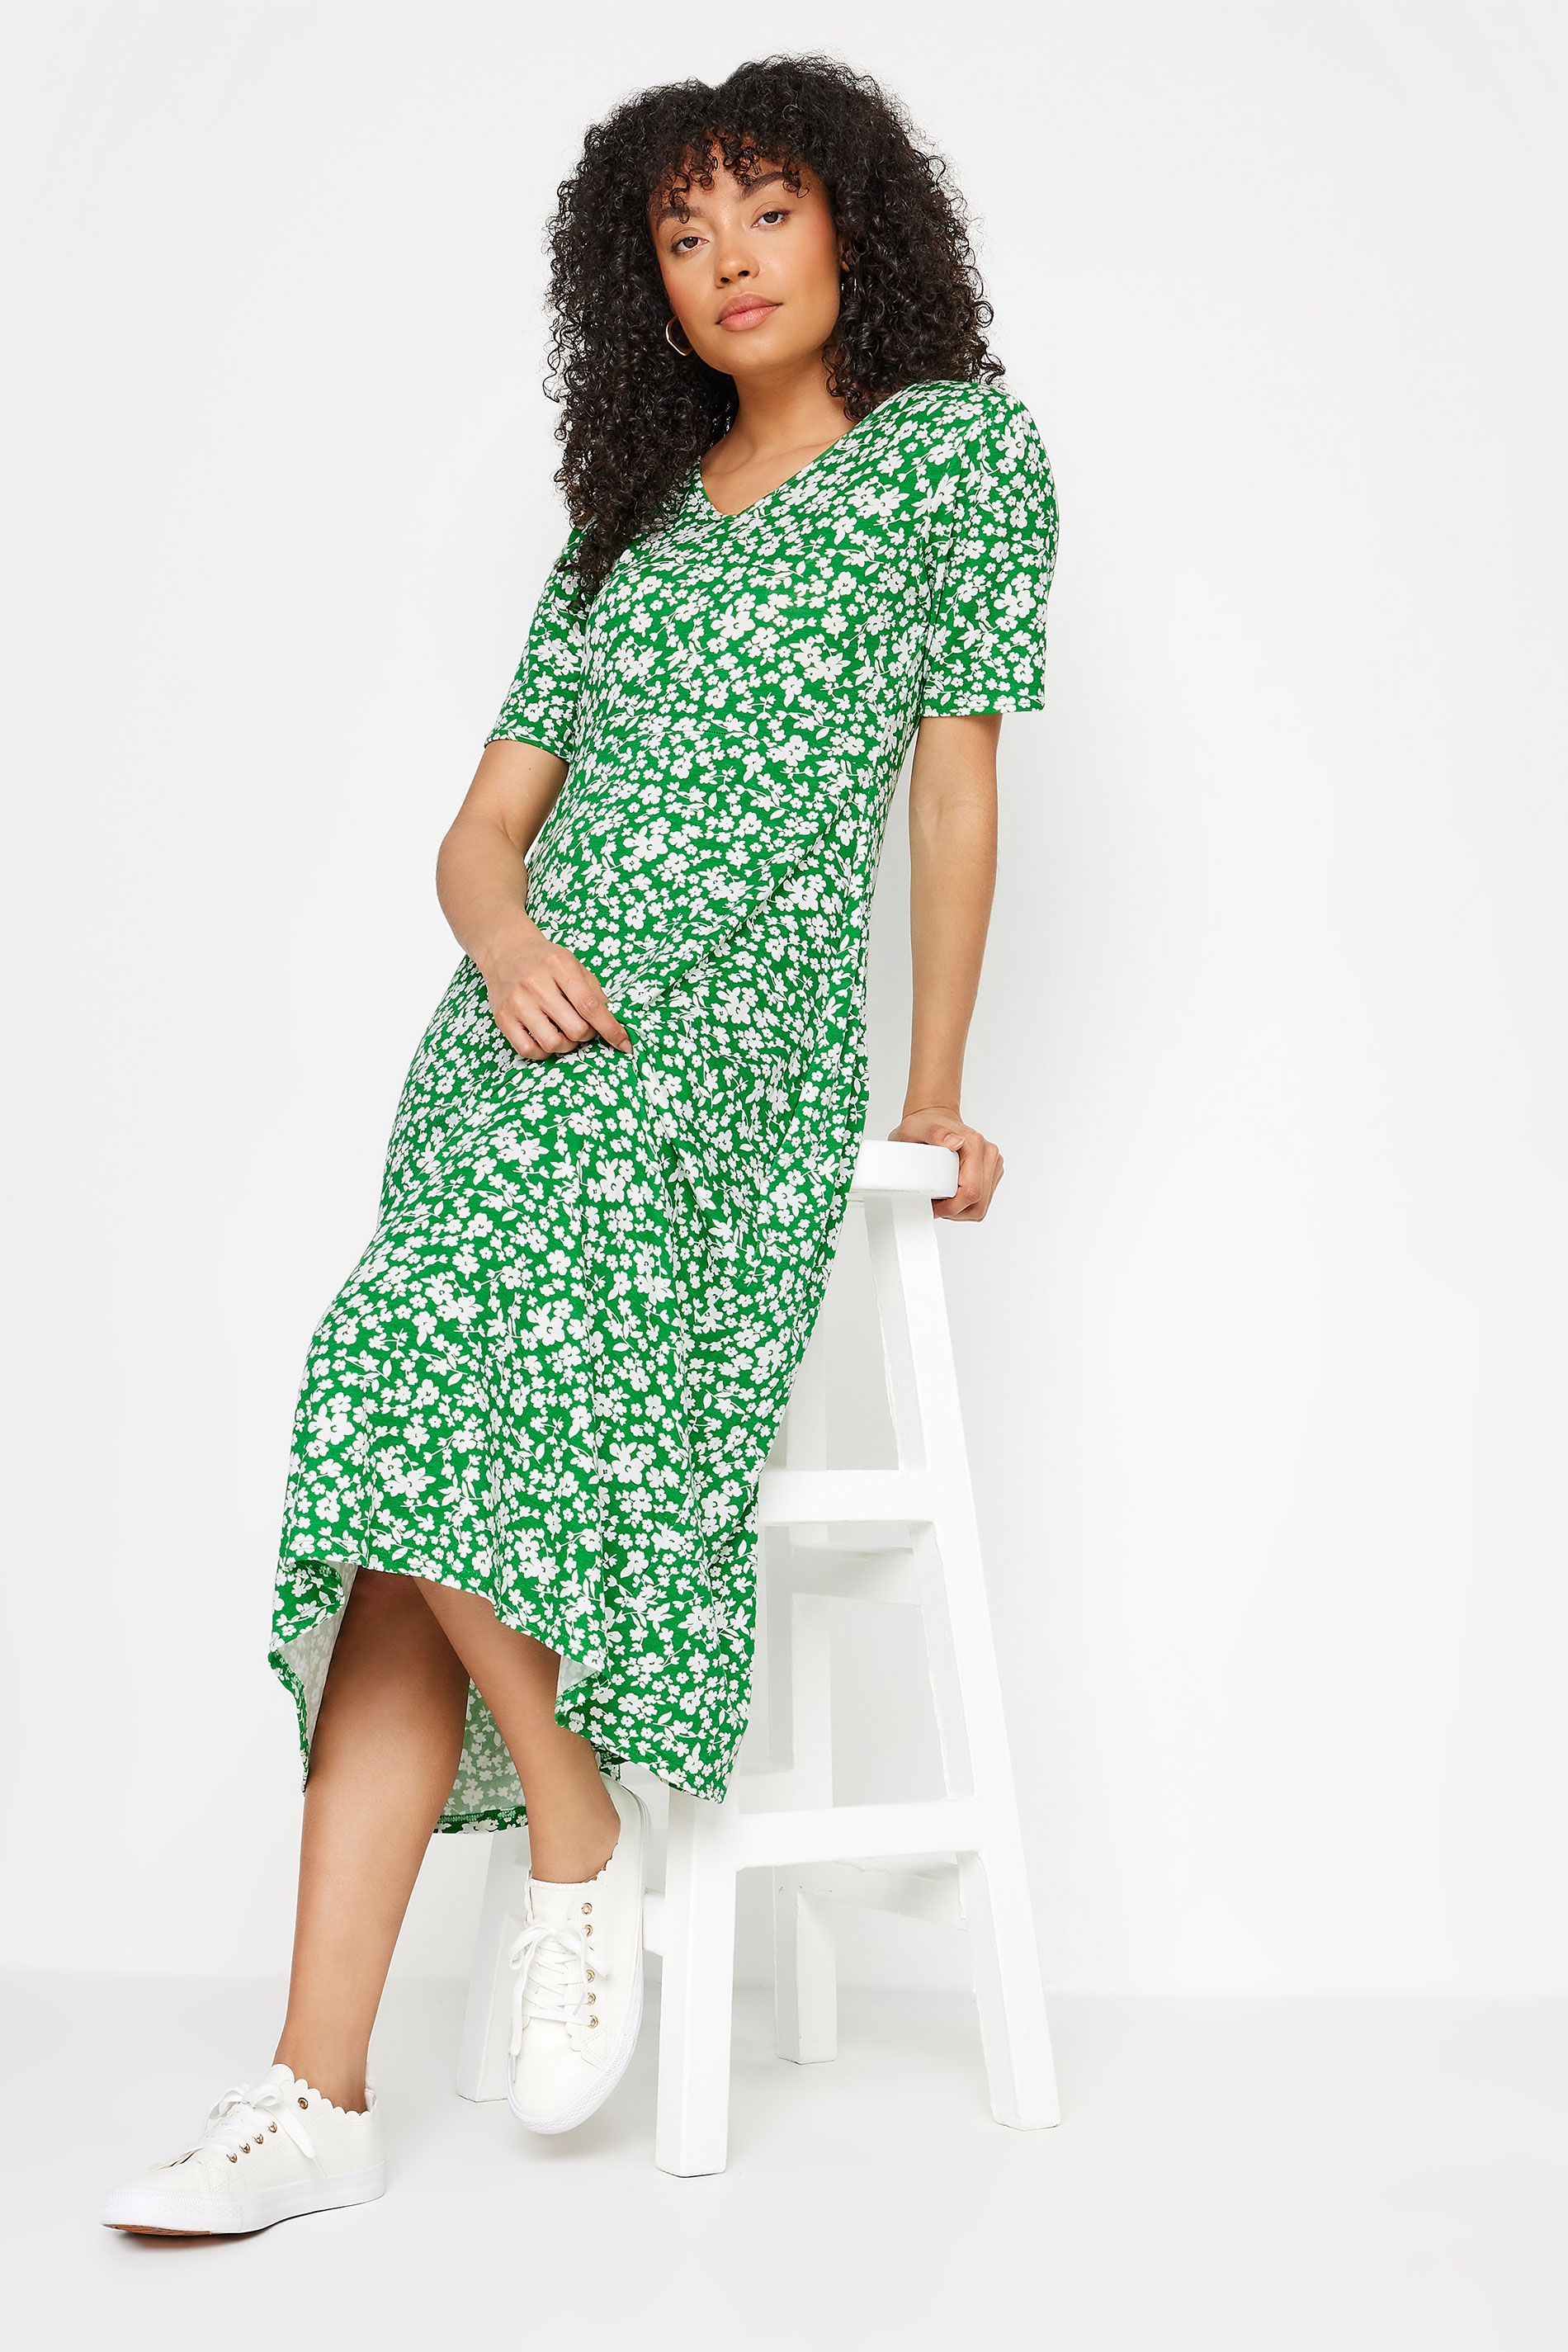 M&Co Green Ditsy Floral Print V-Neck Dress | M&Co 3